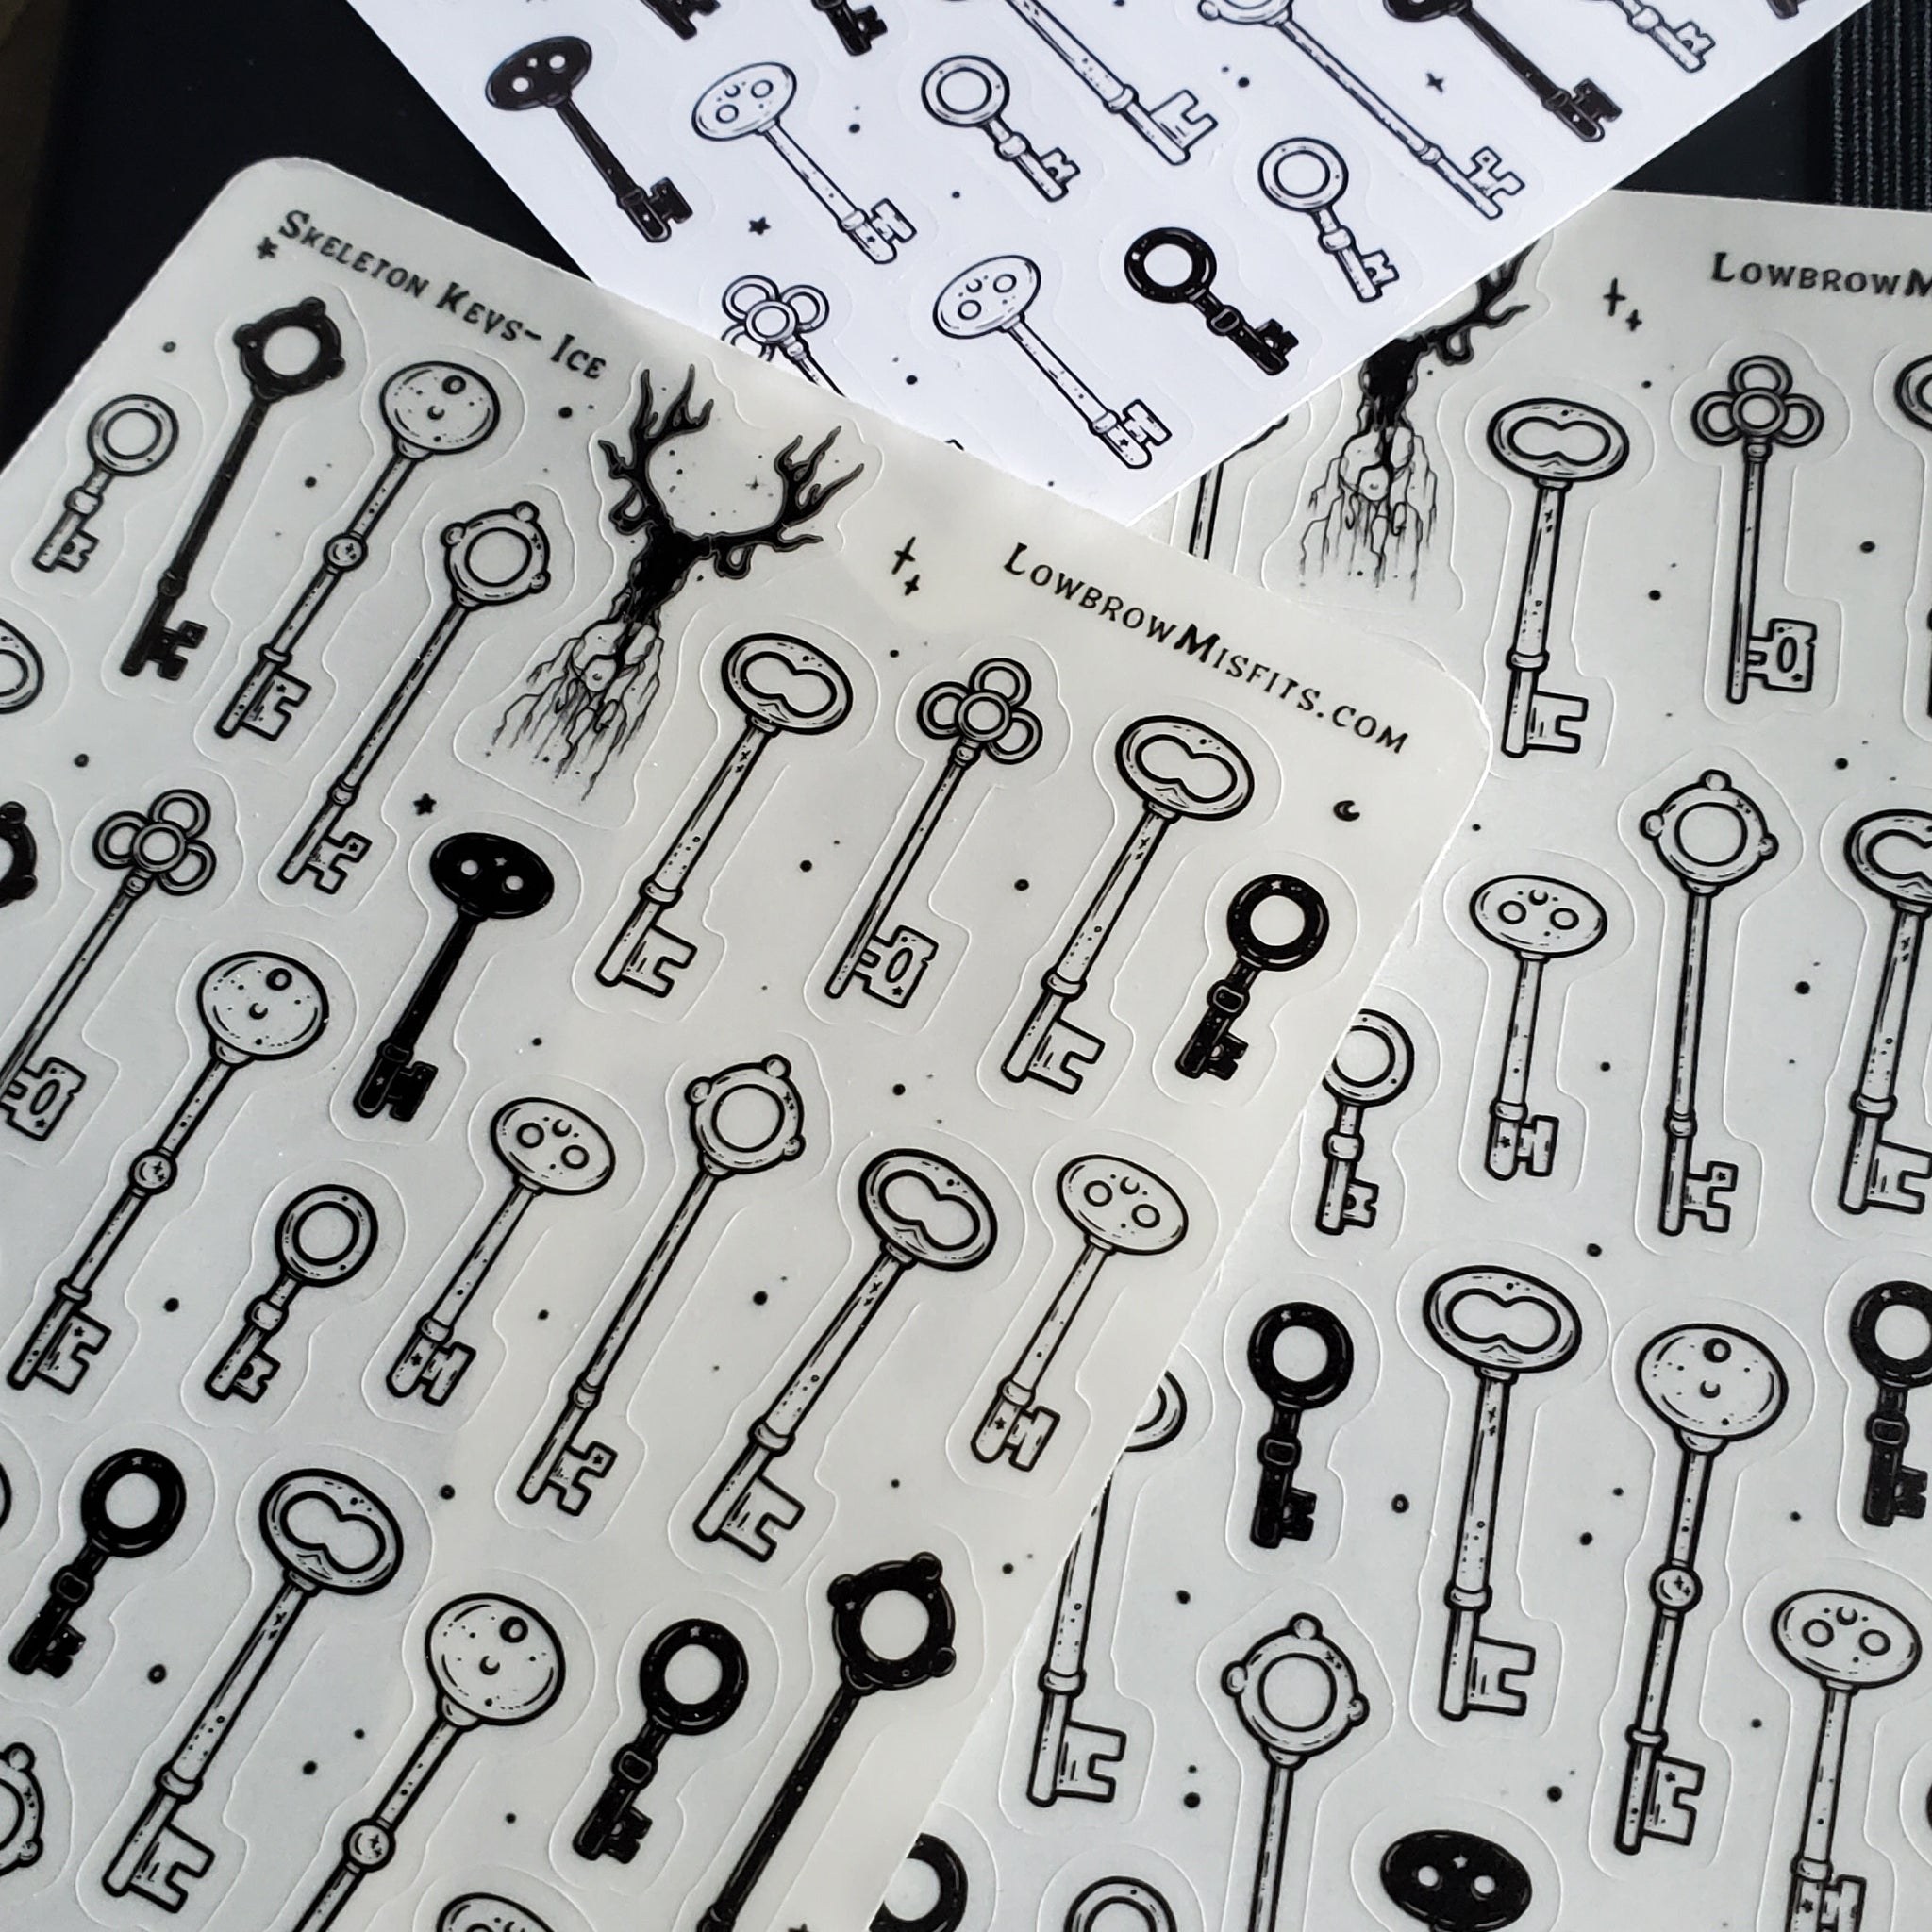 Skeleton Keys STICKER sheet set